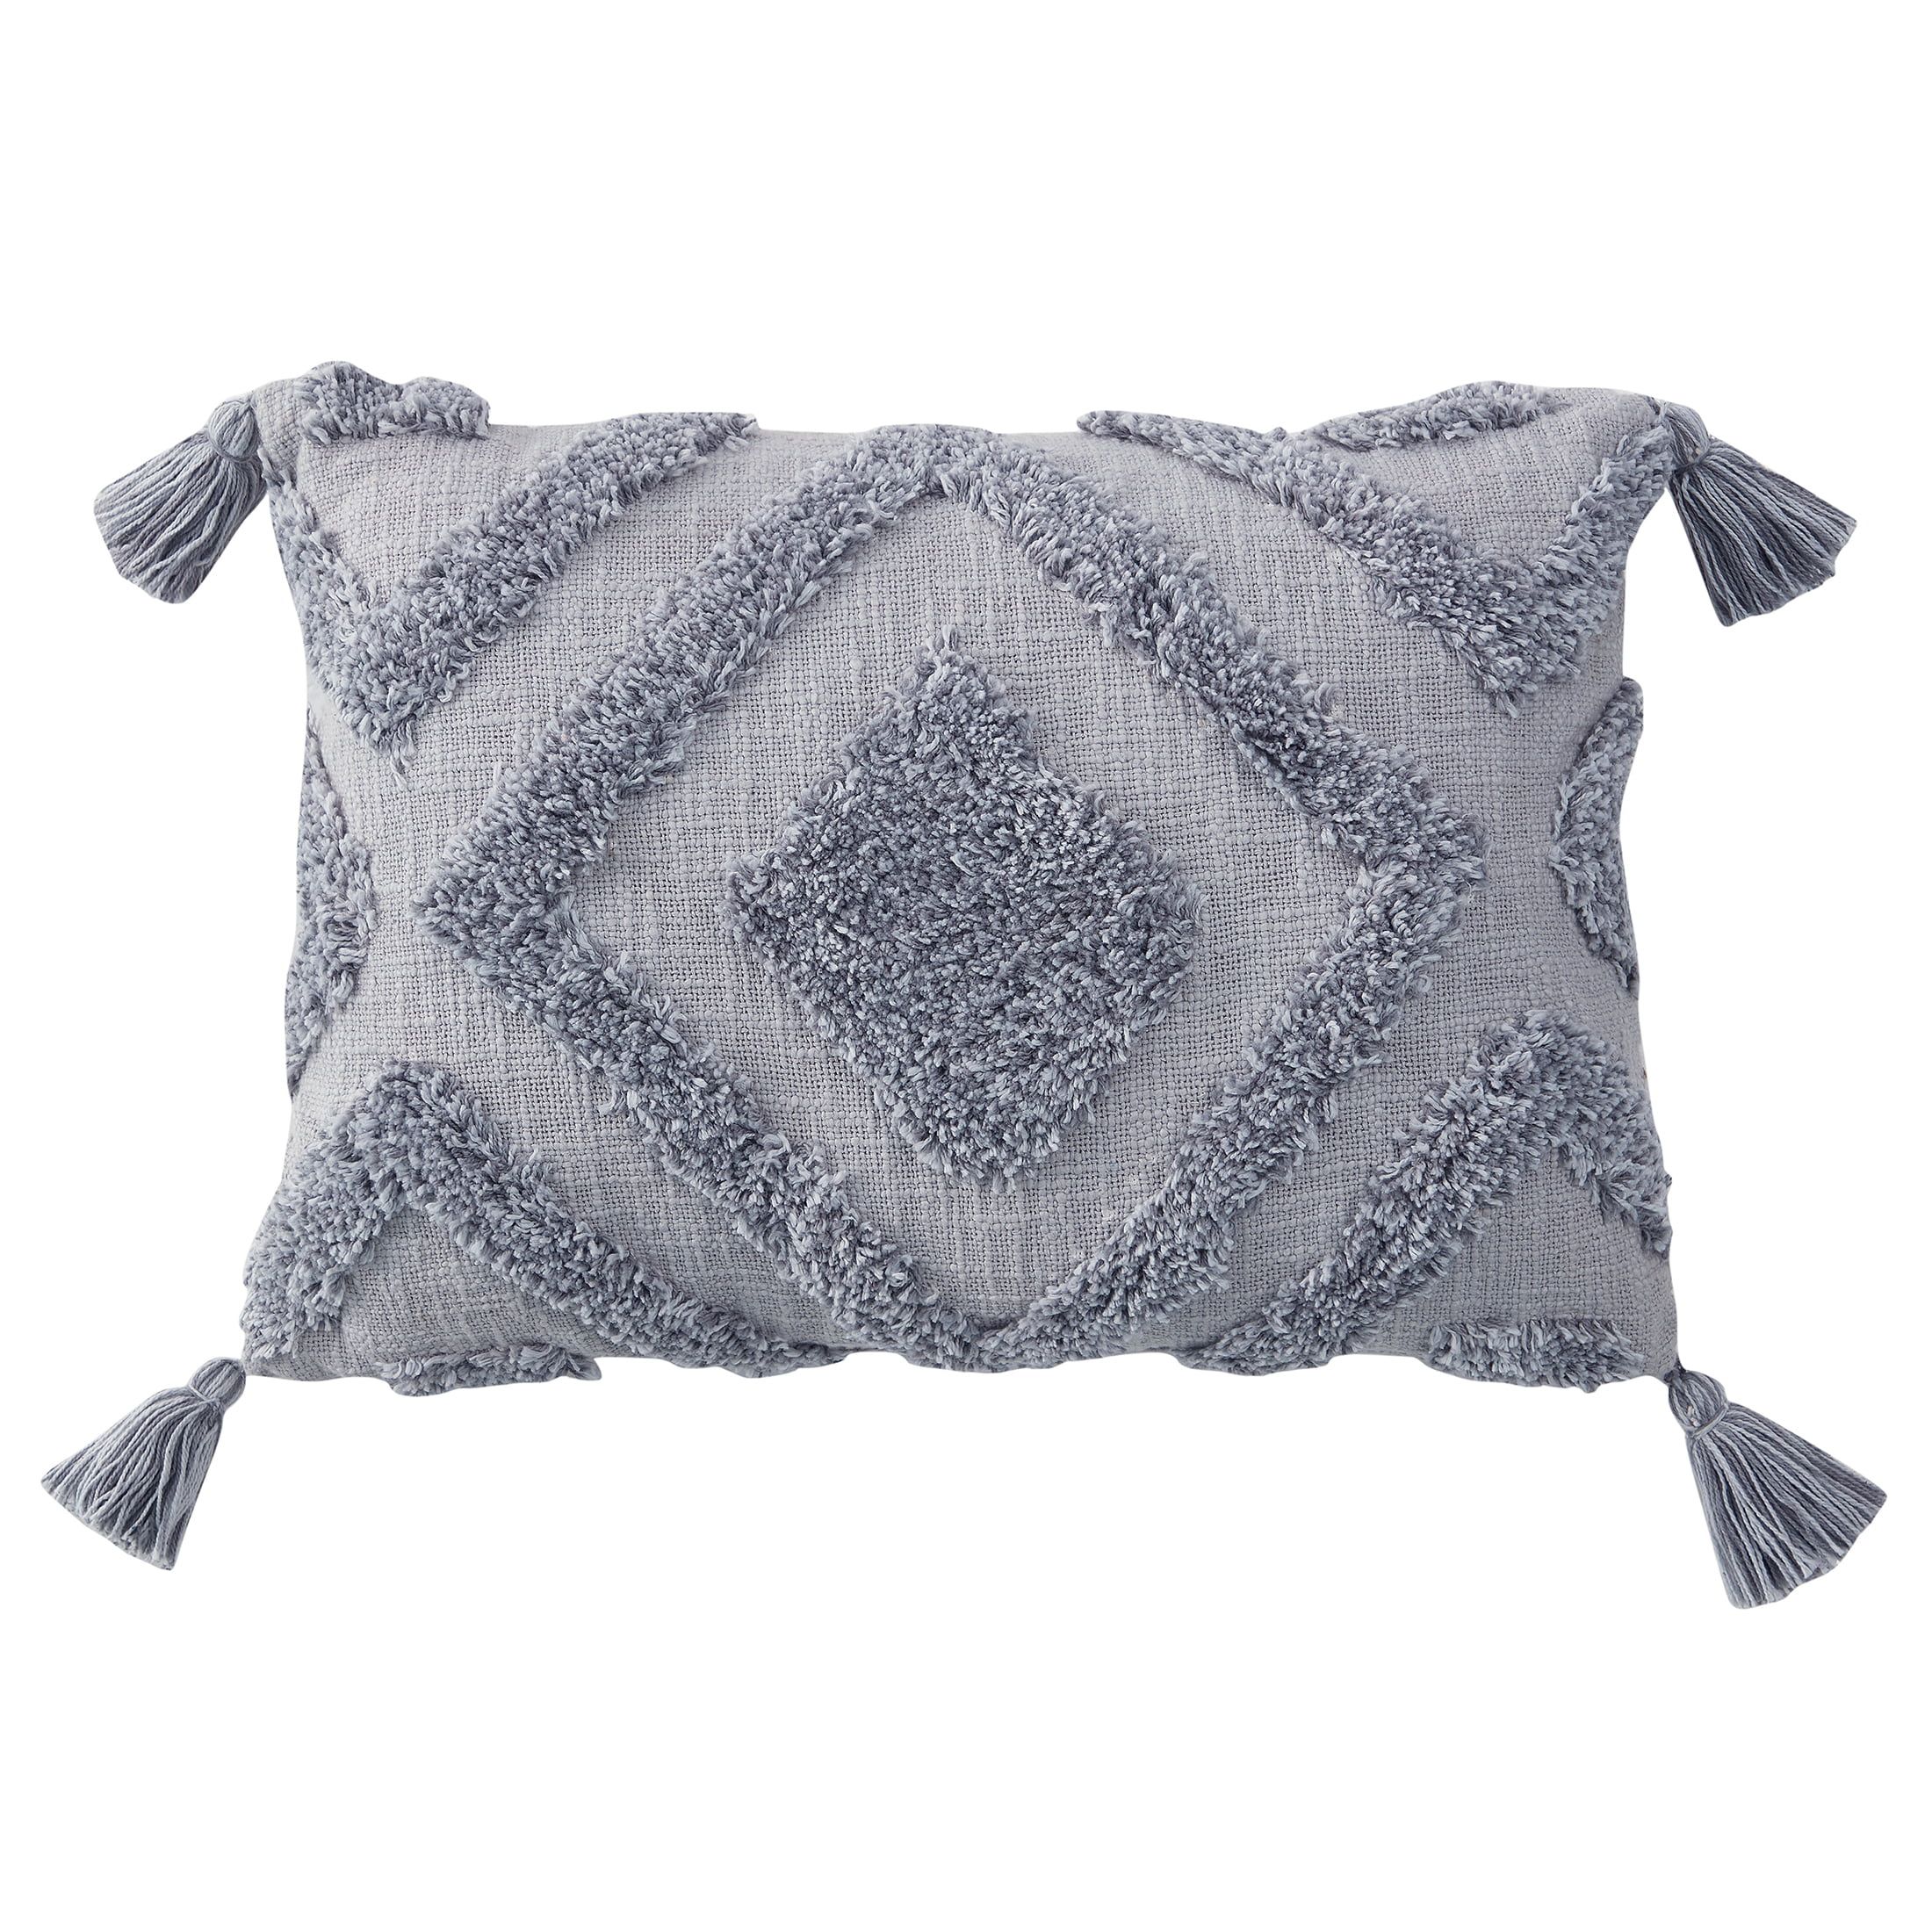 My Texas House Parker Tufted Cotton Oblong Decorative Pillow, 14" x 20", Grey | Walmart (US)